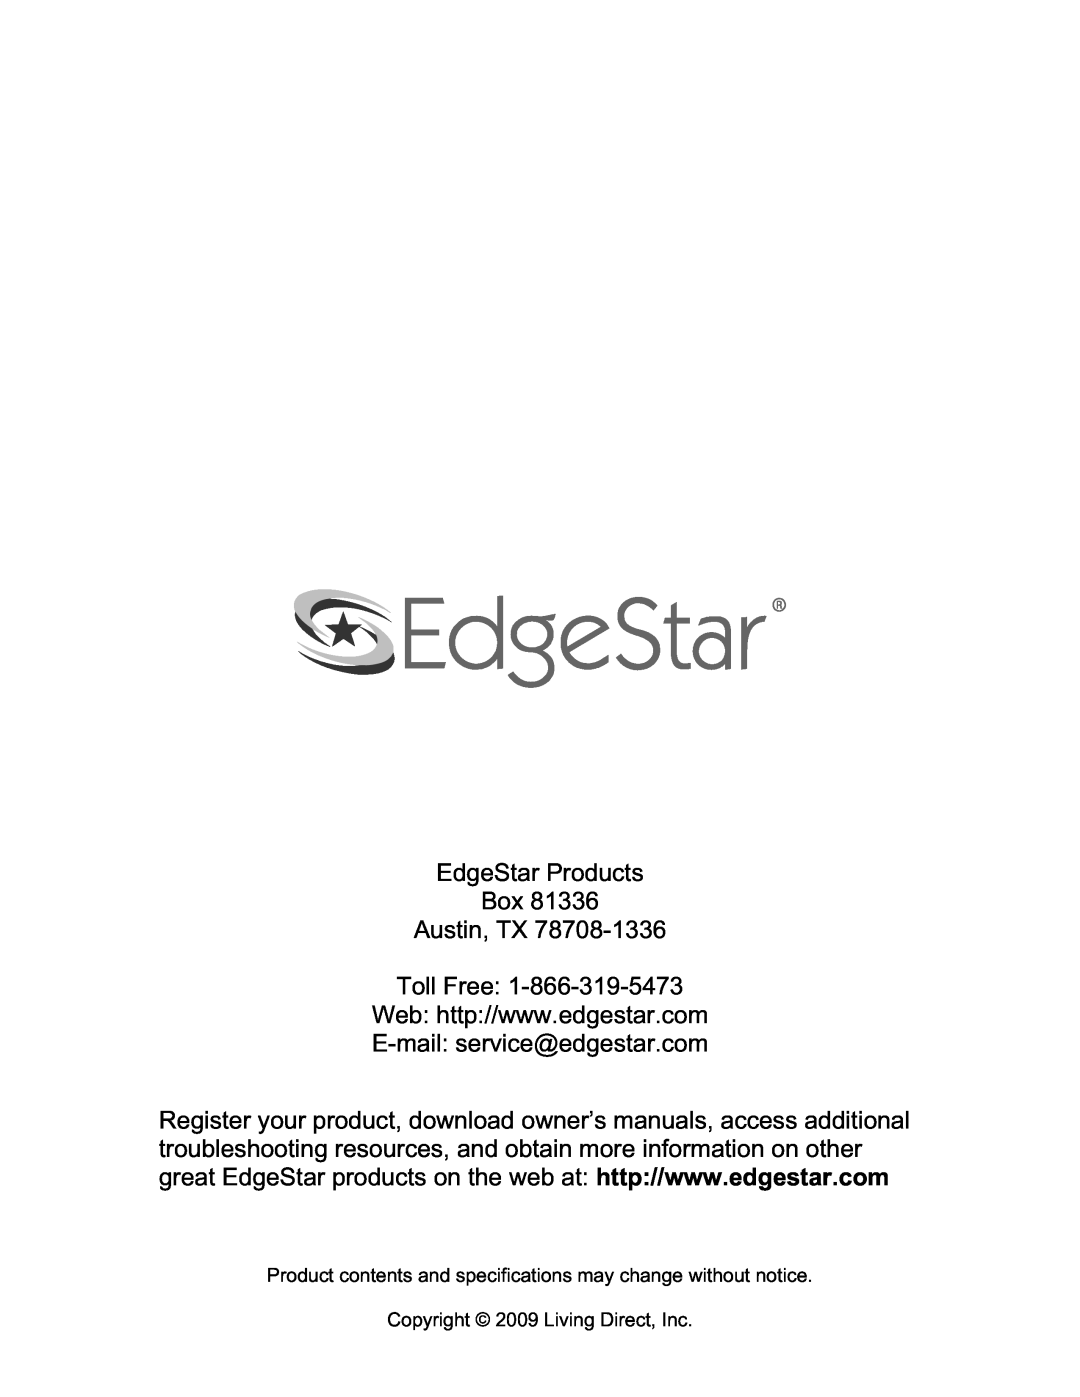 EdgeStar EAC211TS manual EdgeStar Products Box Austin, TX Toll Free, Copyright 2009 Living Direct, Inc 